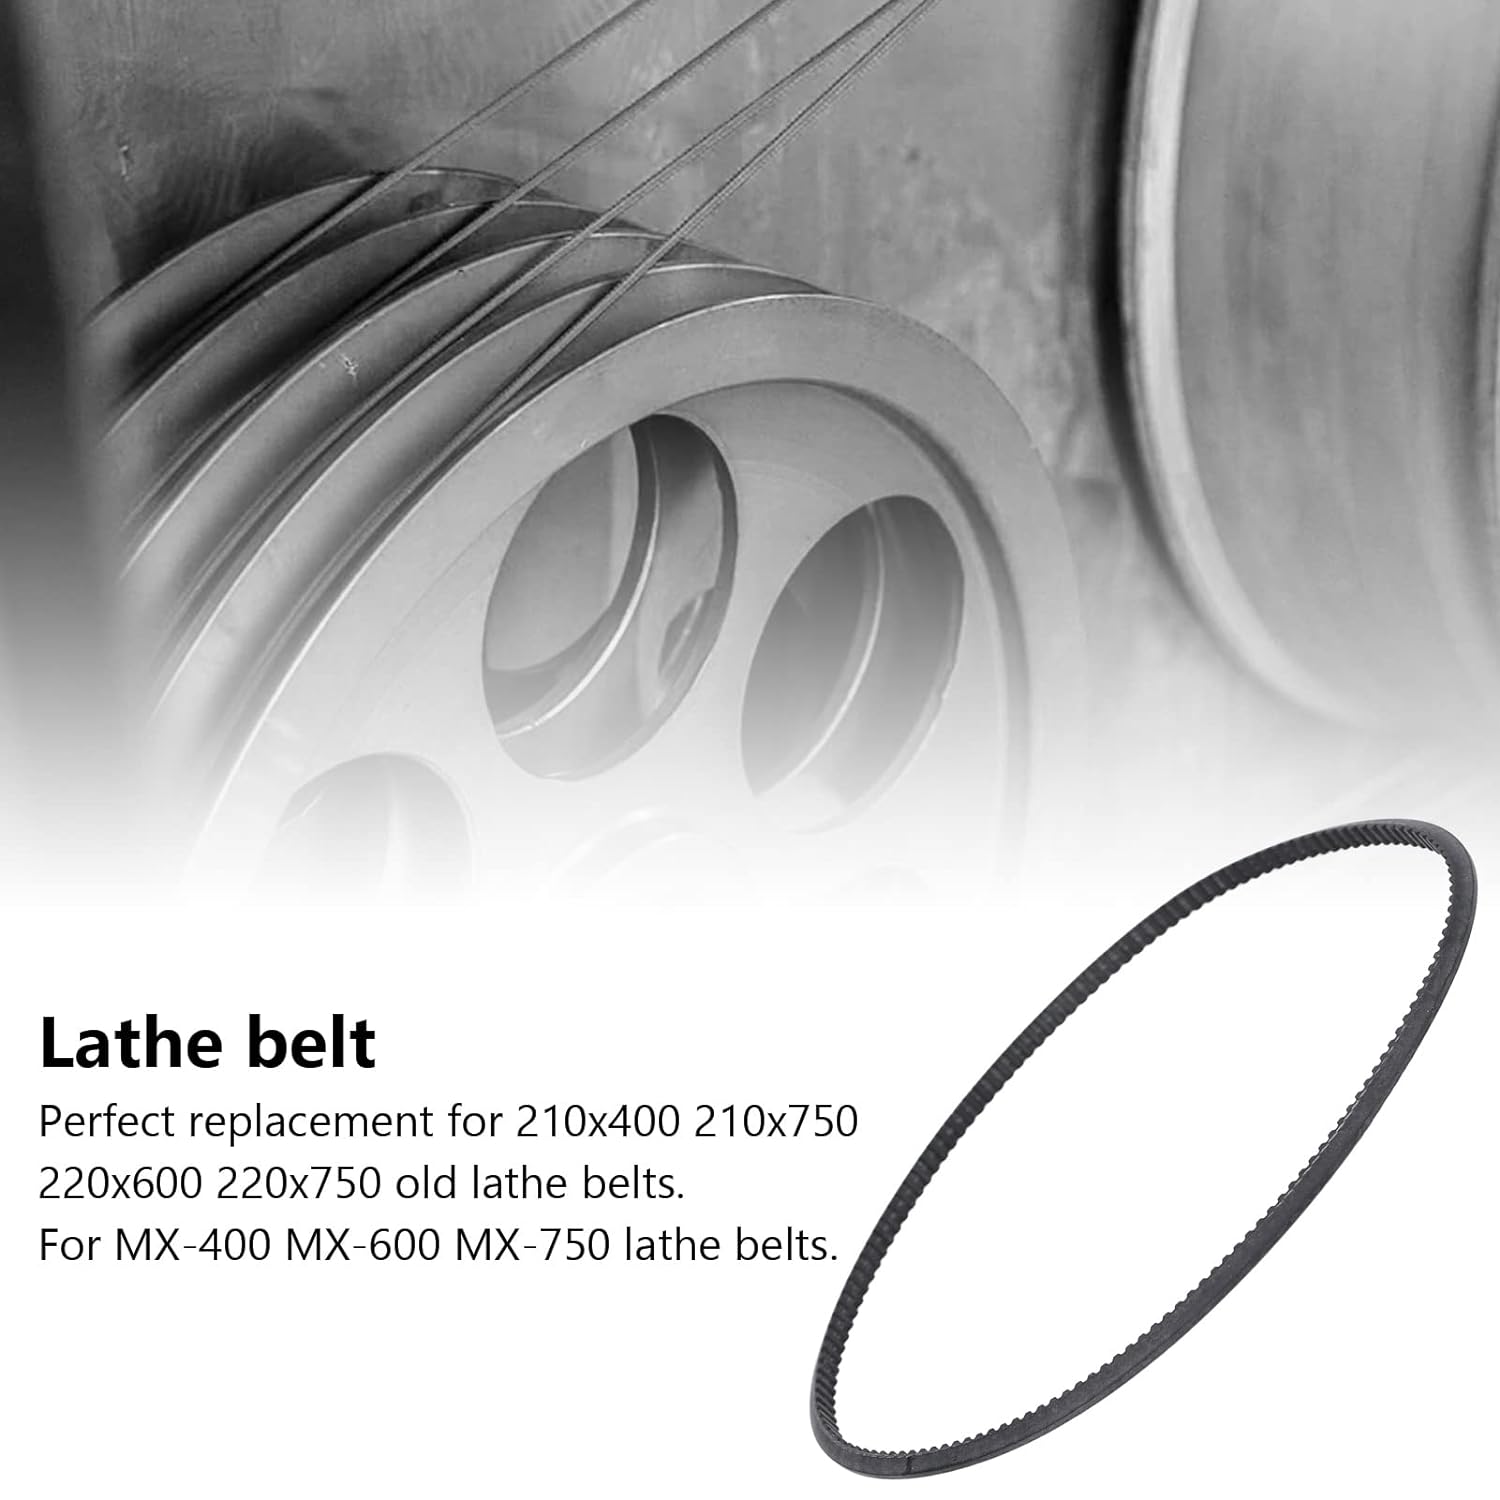 Generic 5M375 Drive Belt Replacement, Rubber Lathe Belt for 210x400 210x750 220x600 220x750 MX400 MX600 MX750 Mini Lathes